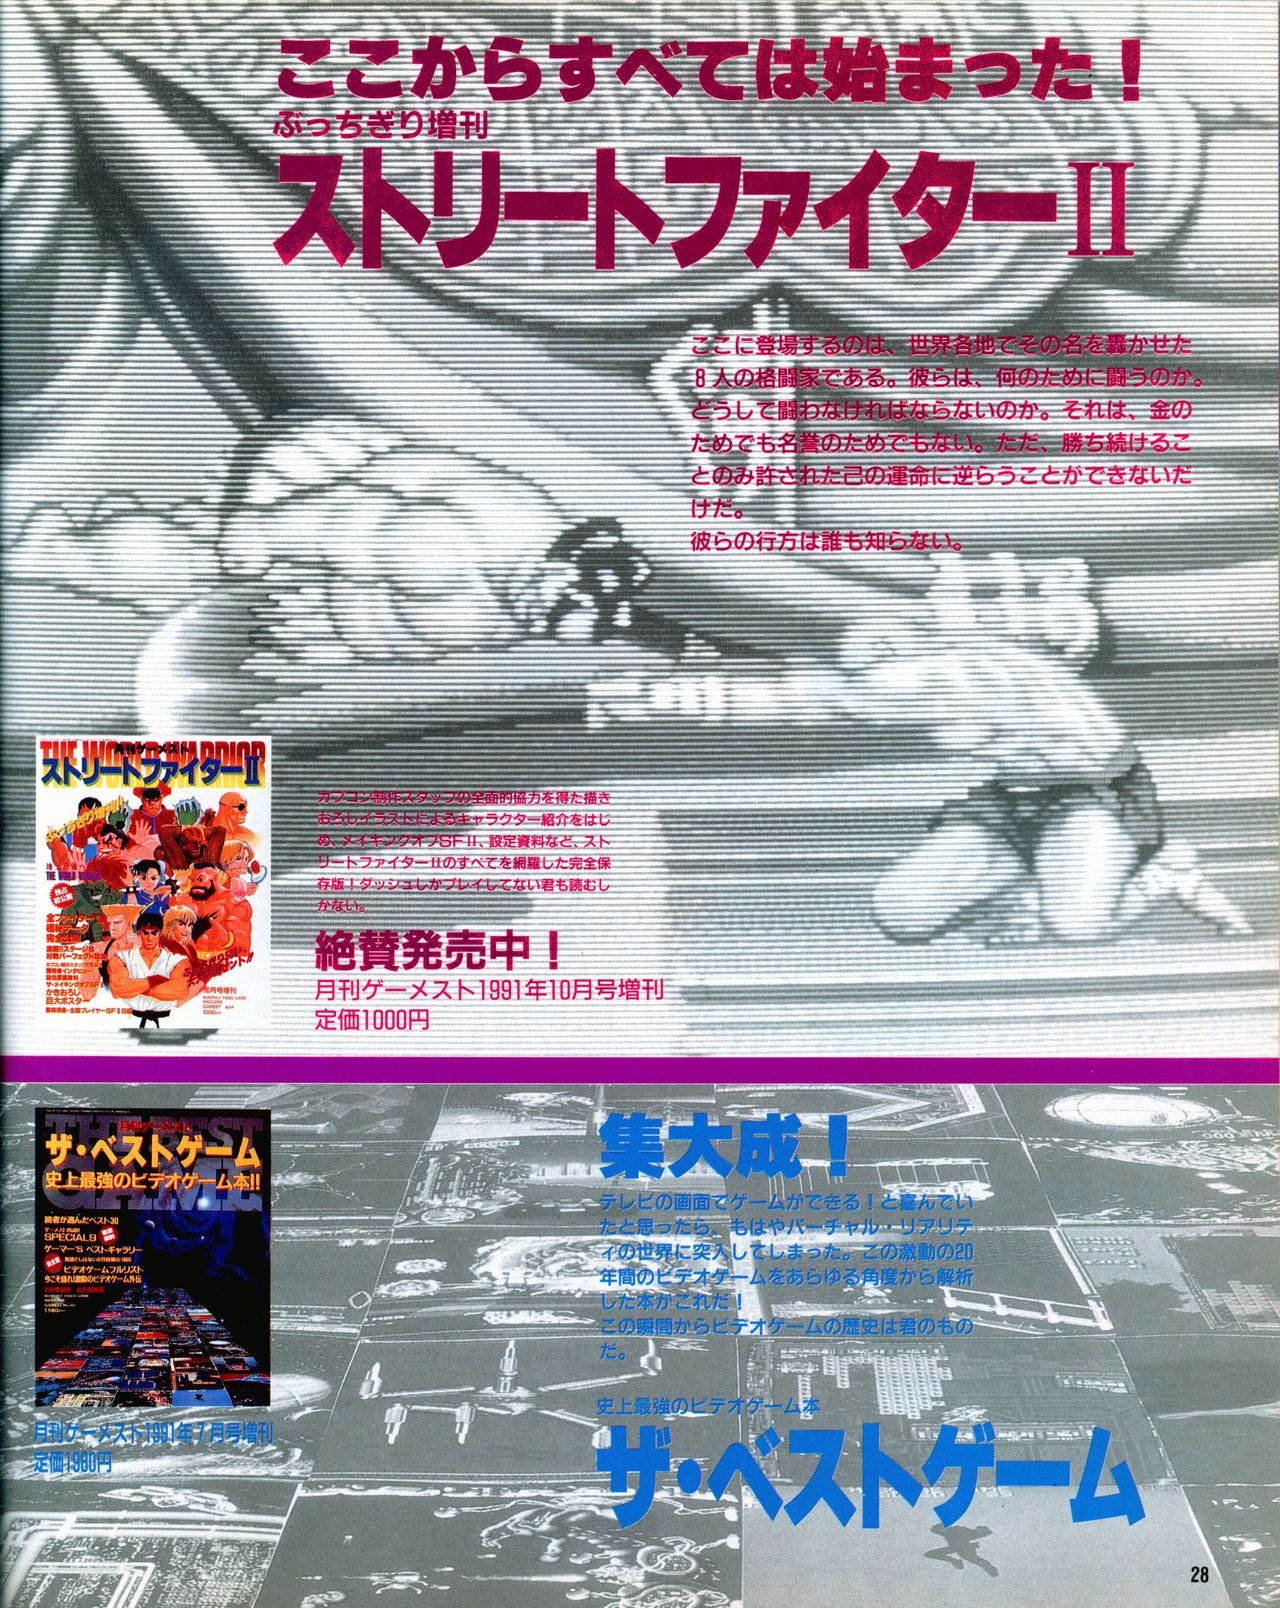 Street Fighter II Dash - Gamest special issue 77 29